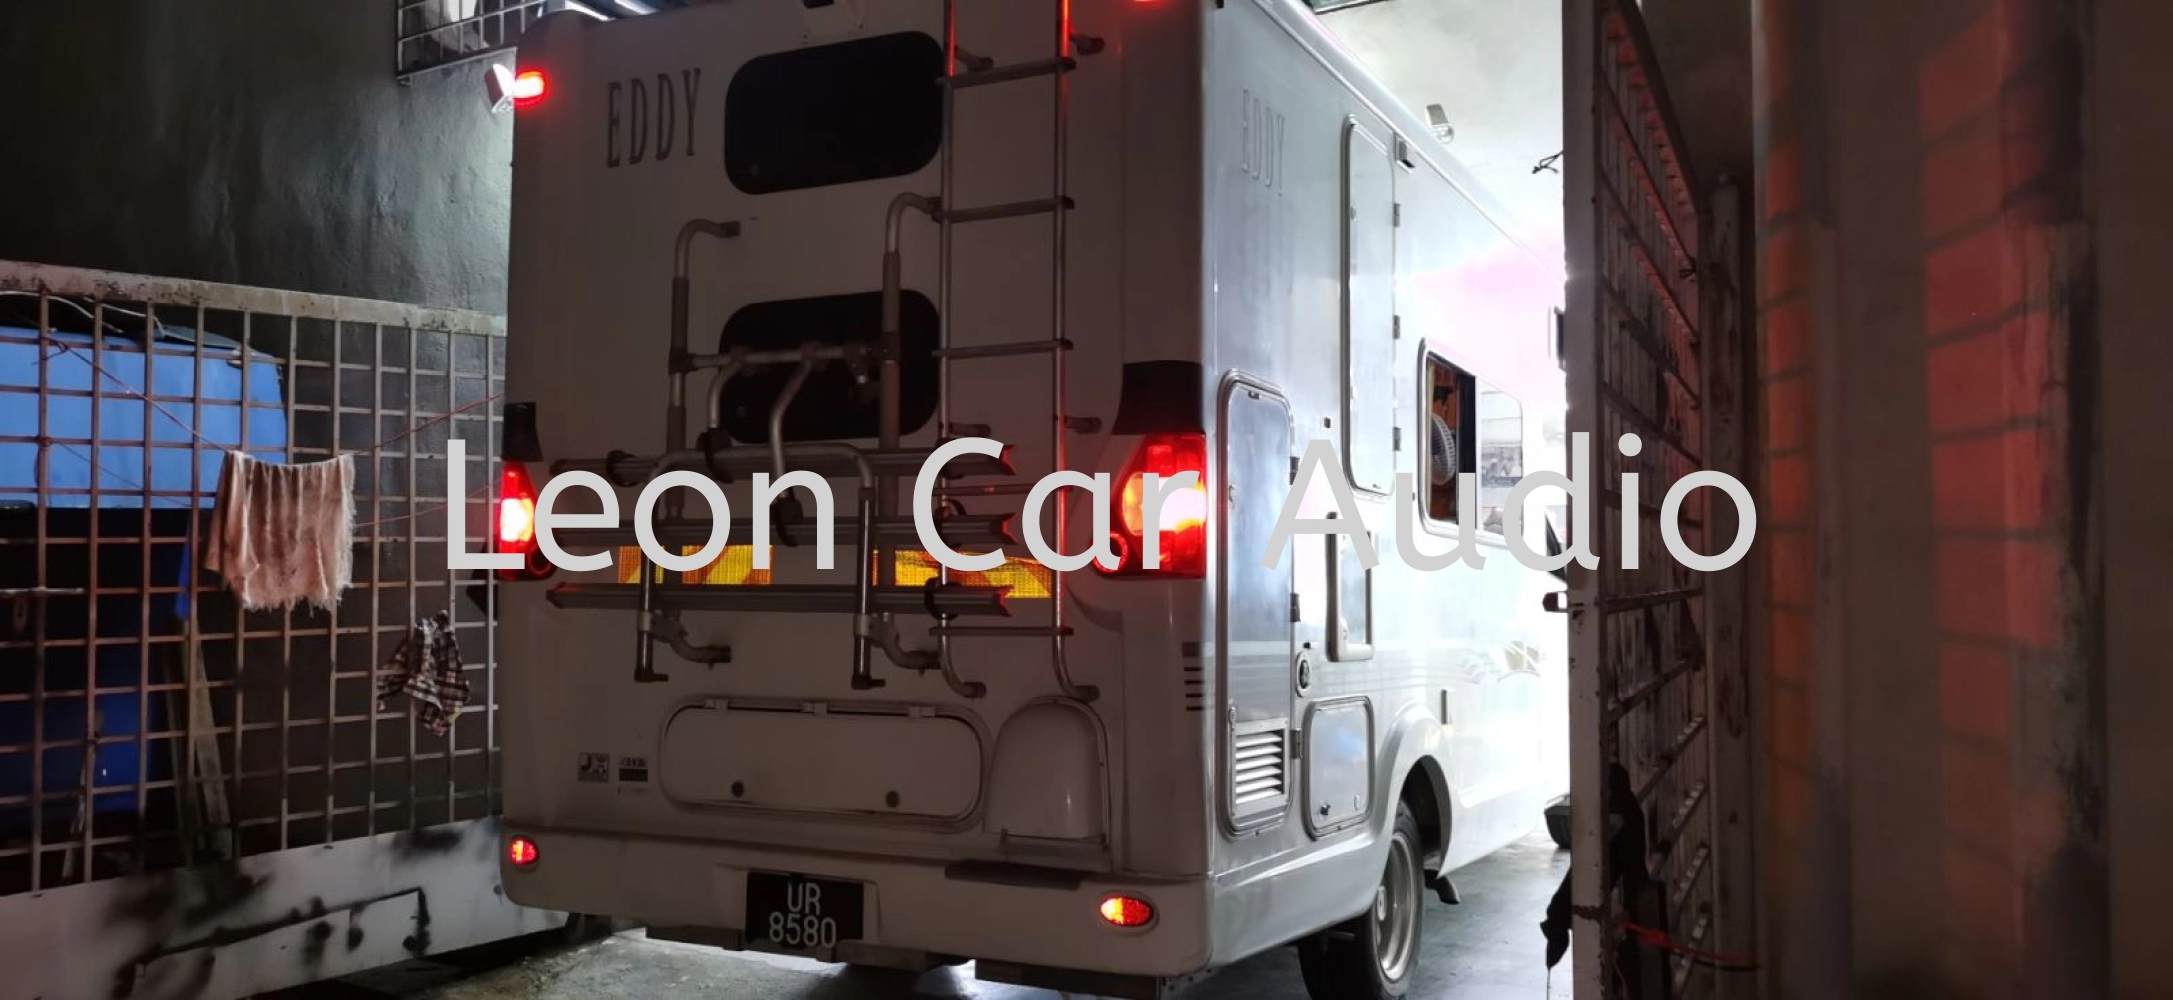 Leon Toyota camroad motorhome Caravan RV 4ch 1080P AHD 4G Mobile DVR Camera CCTV Realtime Video Recorder Remote